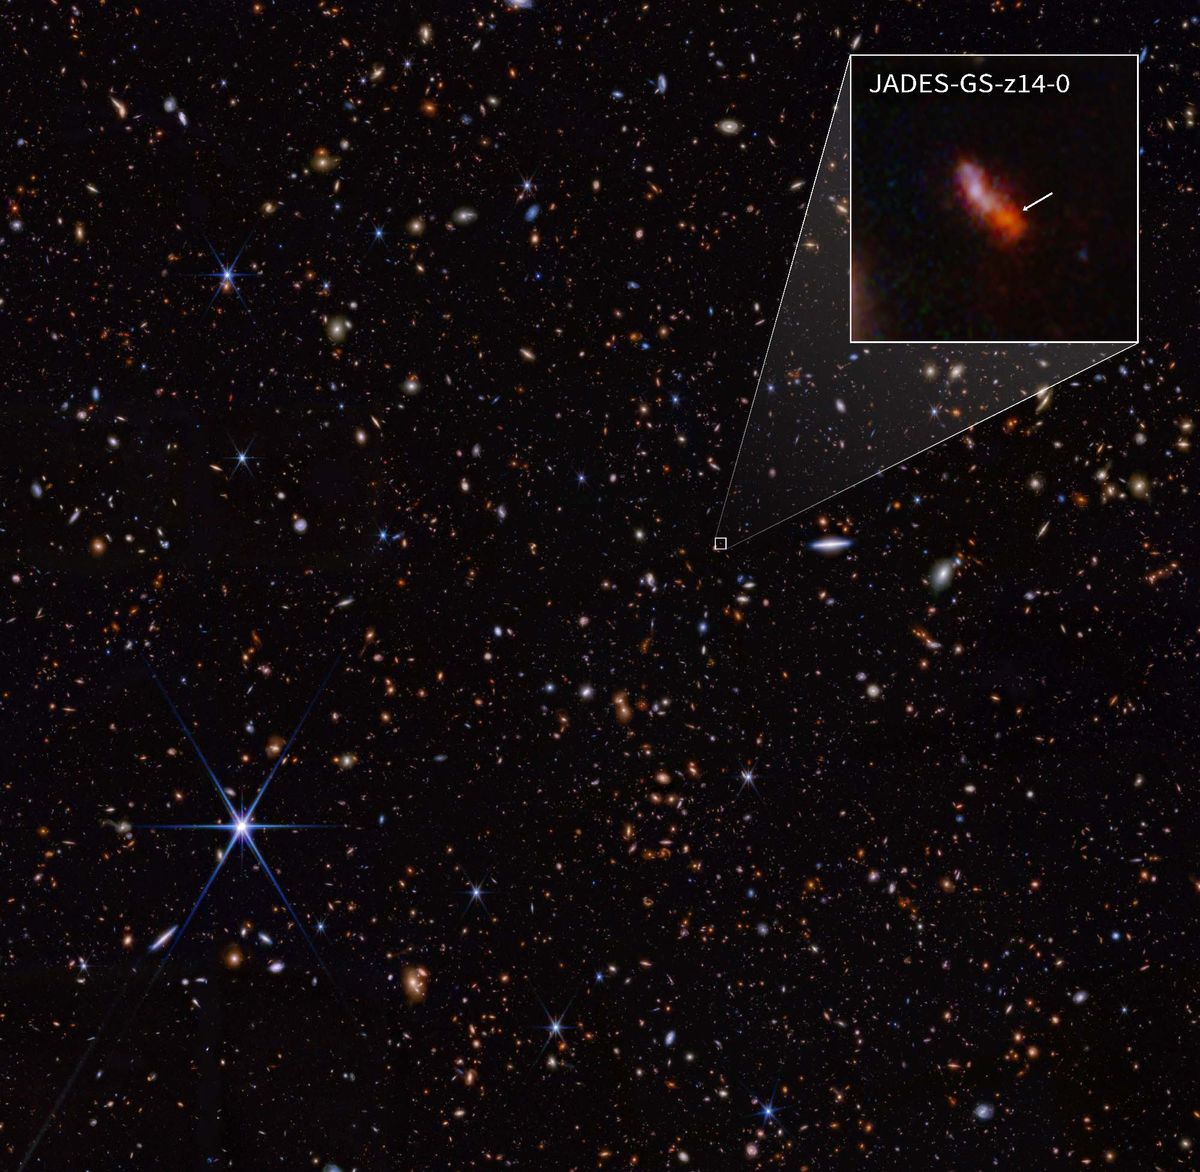 A visão do JWST da região do Hubble Ultra Deep Field. A galáxia JADES-GS-z14-0, atual candidata a mais distante do universo, é mostrada no destaque. (Crédito da imagem: NASA, ESA, CSA, STScI, B. Robertson (UC Santa Cruz), B. Johnson (CfA), S. Tacchella (Cambridge), P. Cargile (CfA))